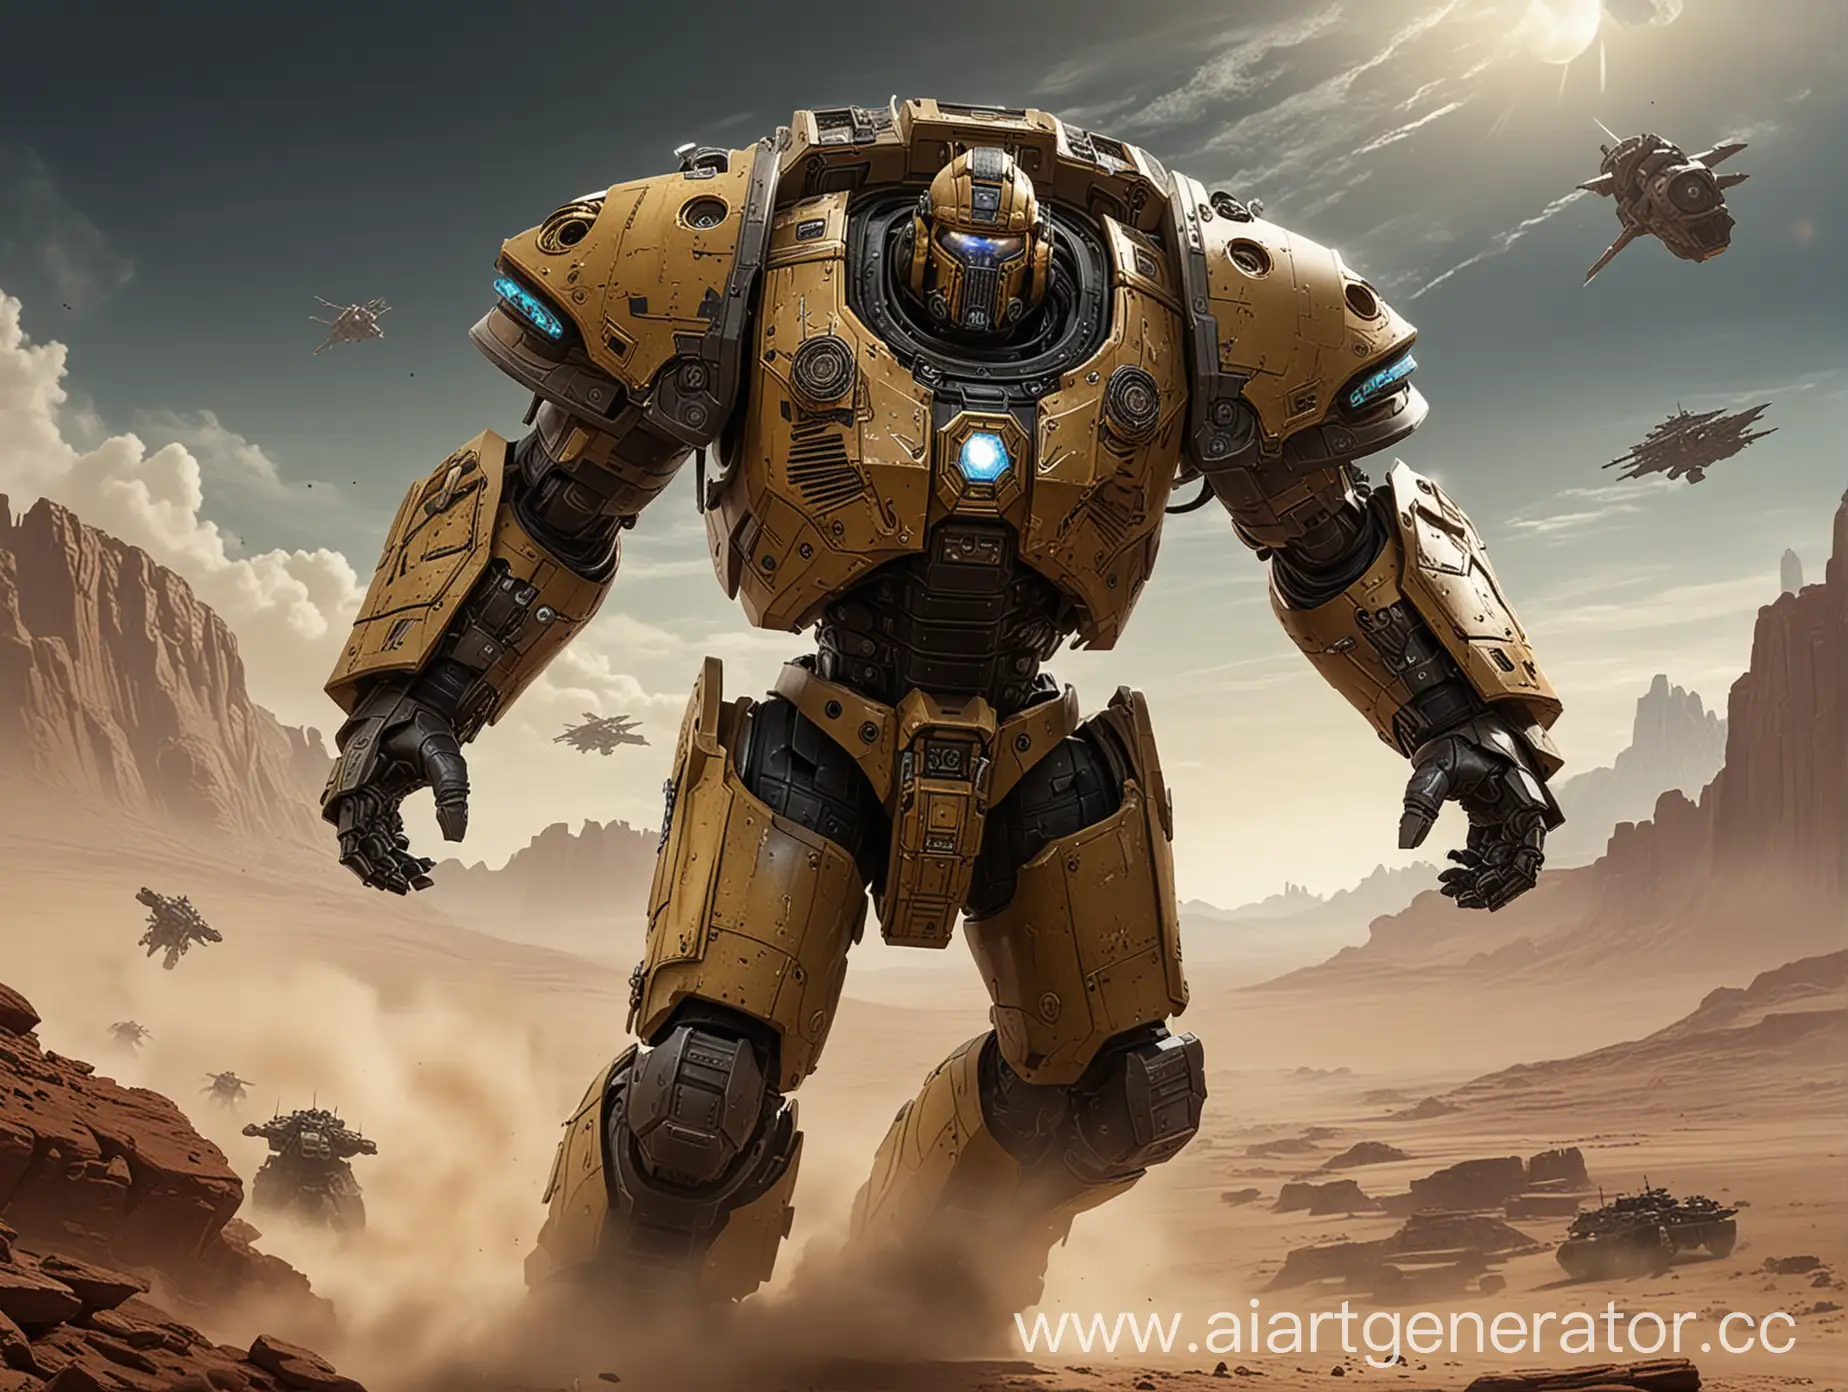 Emperorclass-Titan-Striding-Across-the-Planet-Epic-SciFi-Artwork